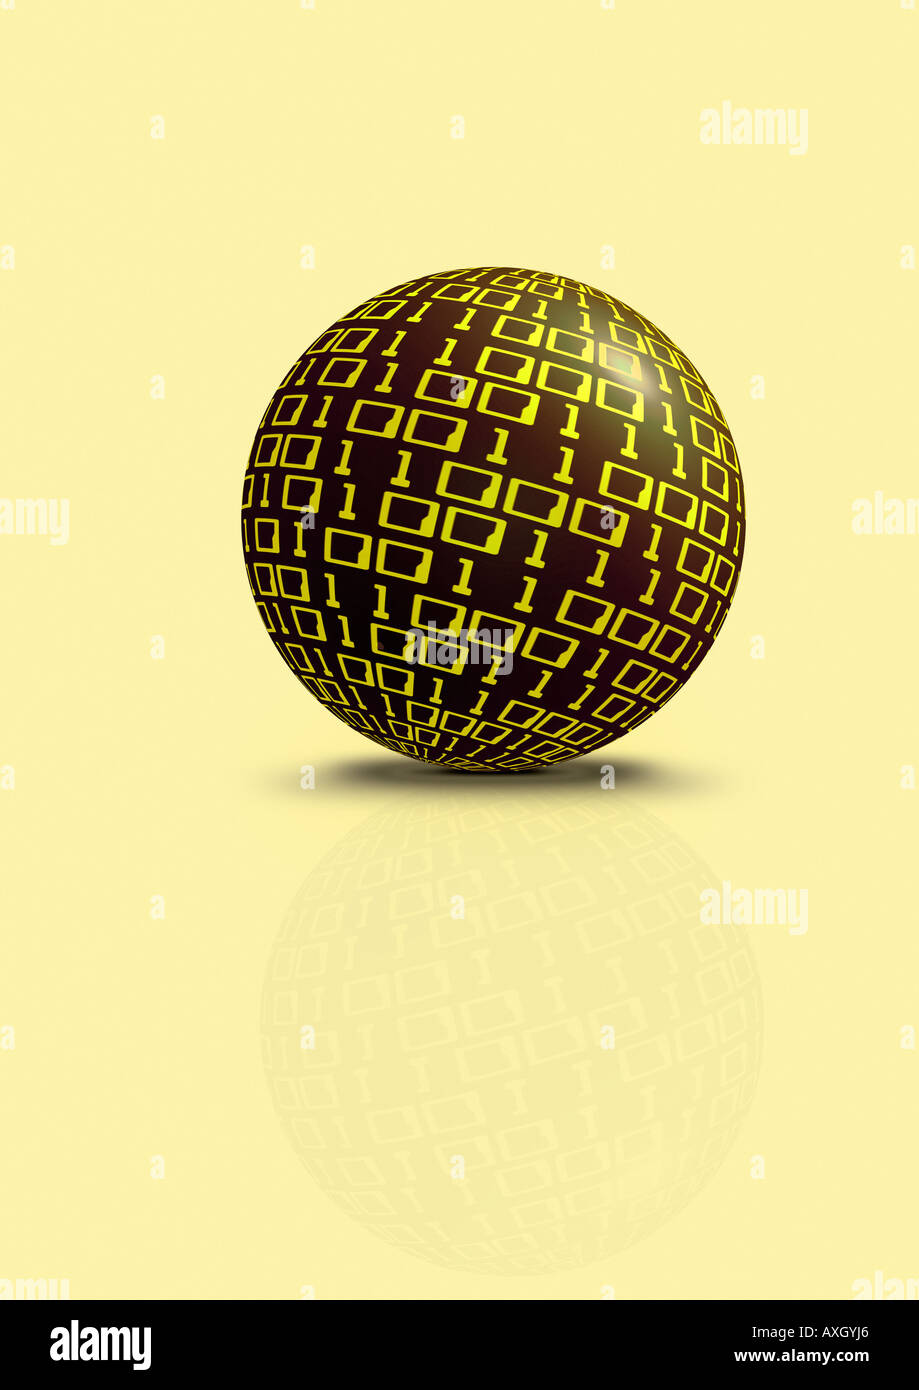 sphere made from 1 and 0 Kugel aus 0 und 1 gebildet digital Stock Photo